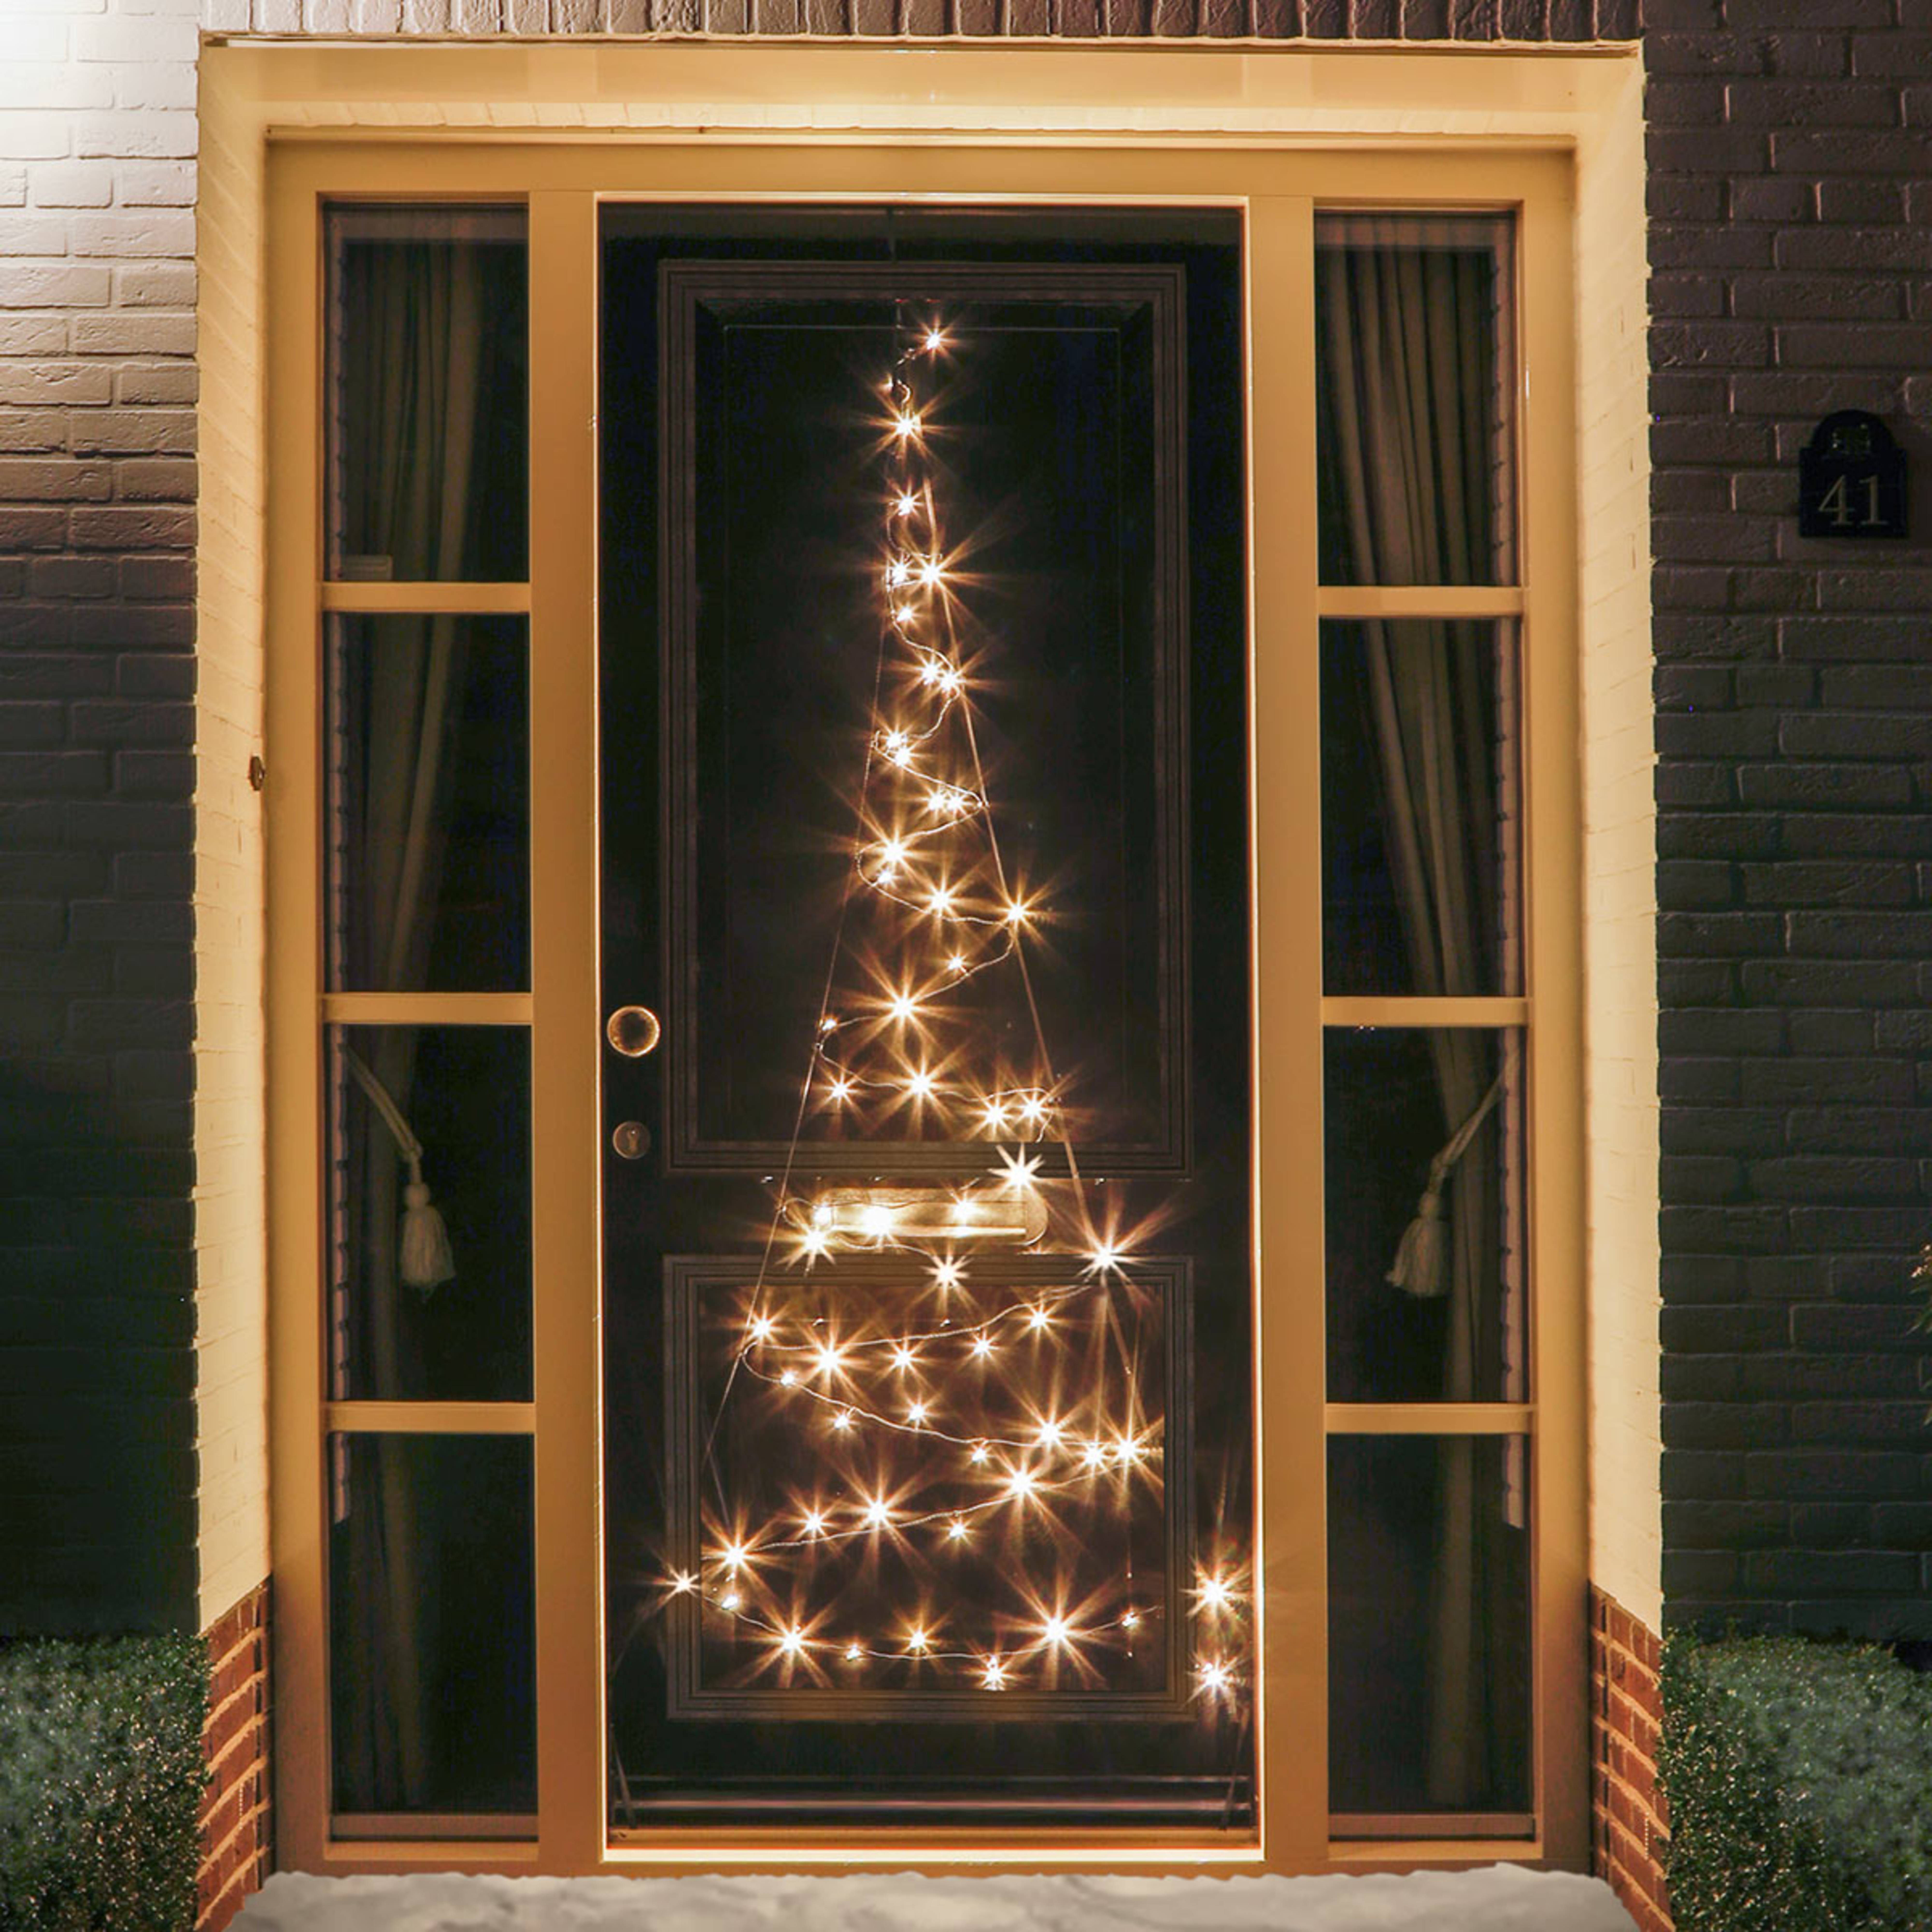 Tür-Weihnachtsbaum-Silhouette Fairybell 120 LEDs